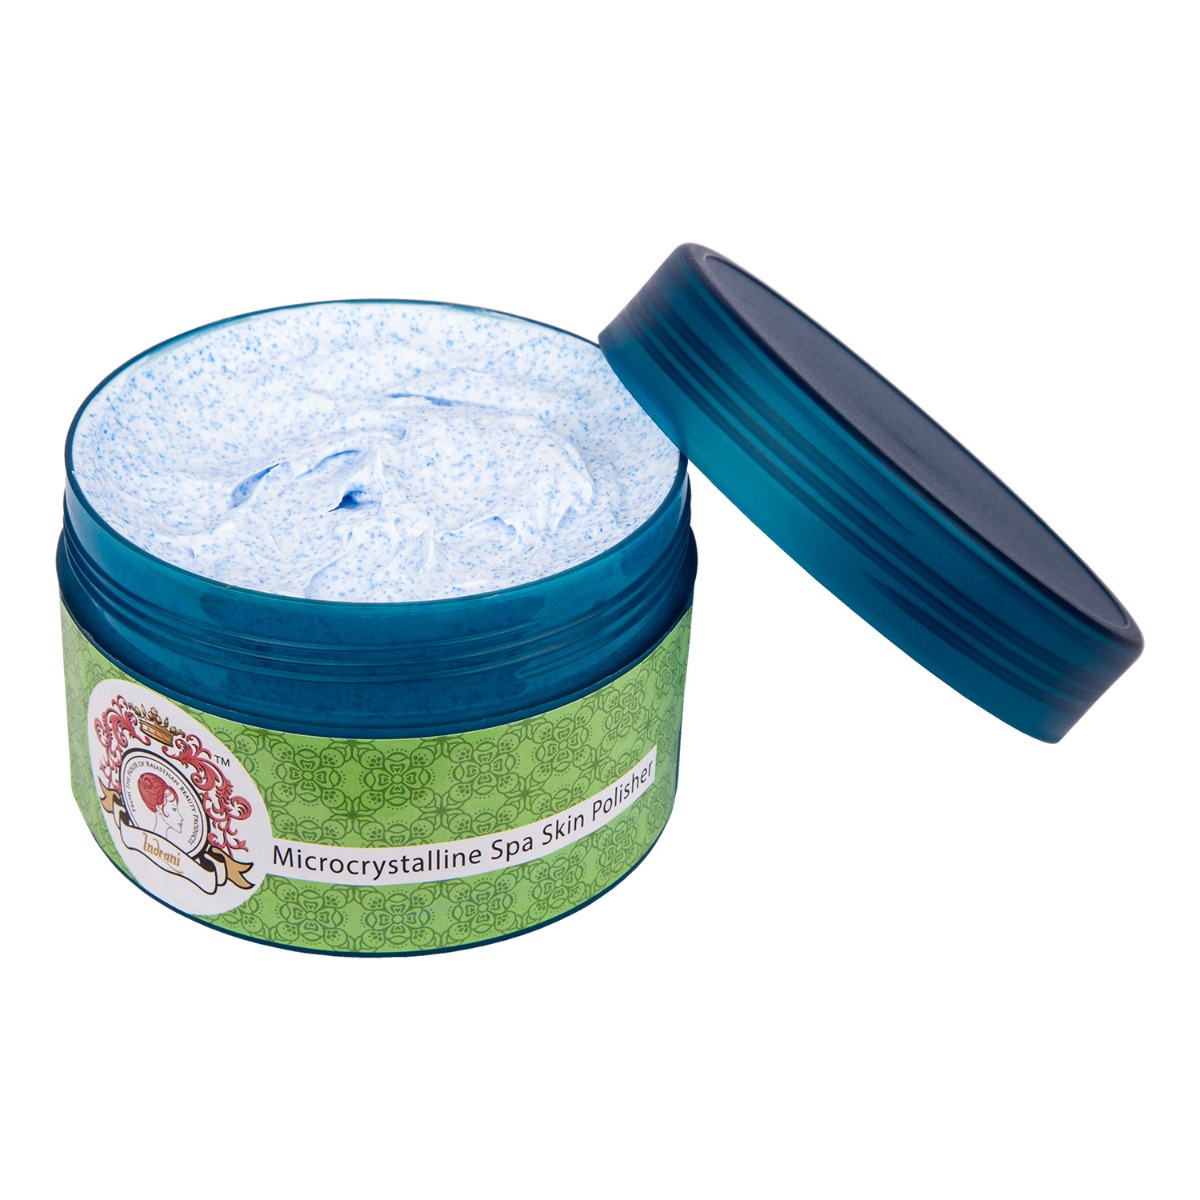 Indrani Microcrystalline Spa Skin Polisher, 300gm